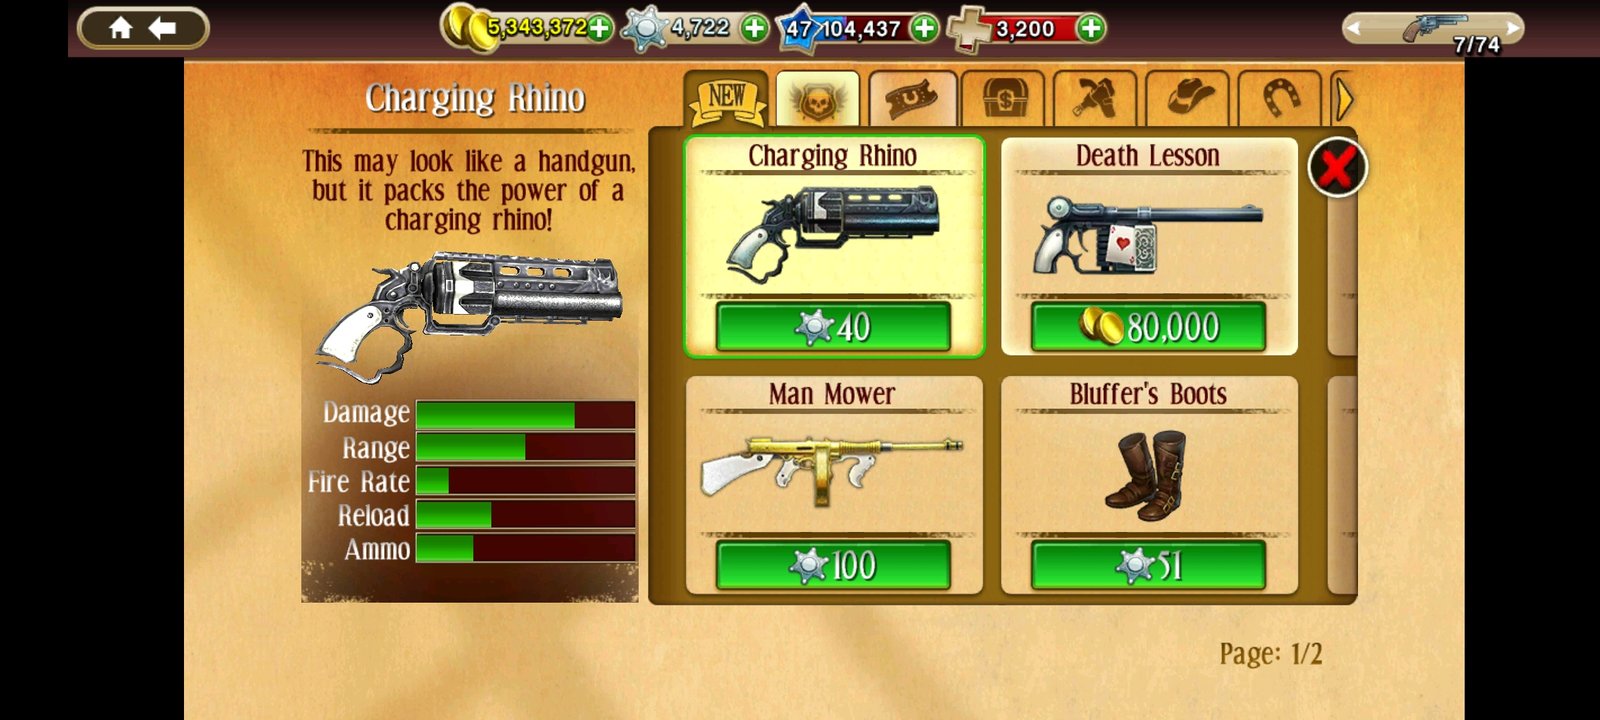 I install Six Guns MOD apk and win a multiplayer game in under 5 minutes -  4K Six Guns 2021 Glitch 